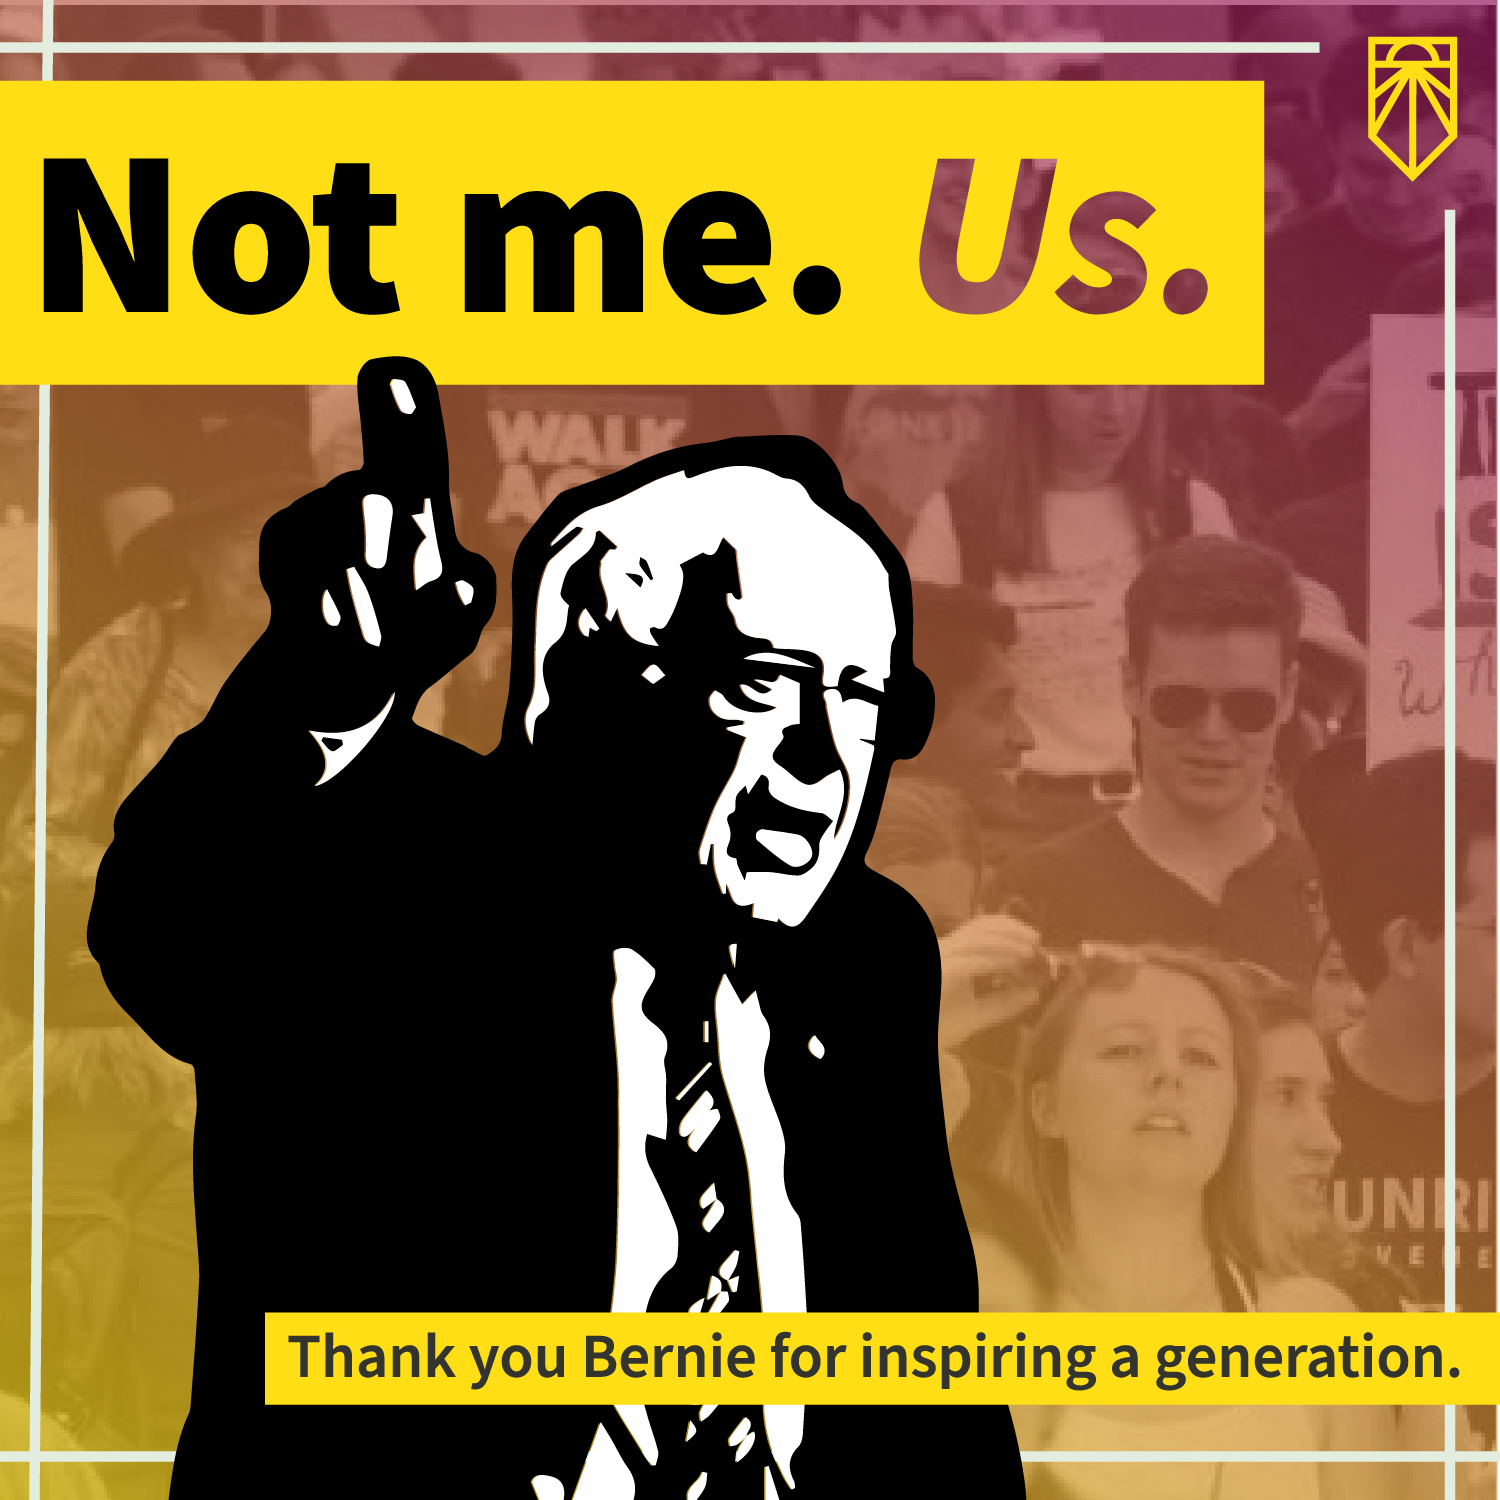 Bernie "Not me. Us." graphic